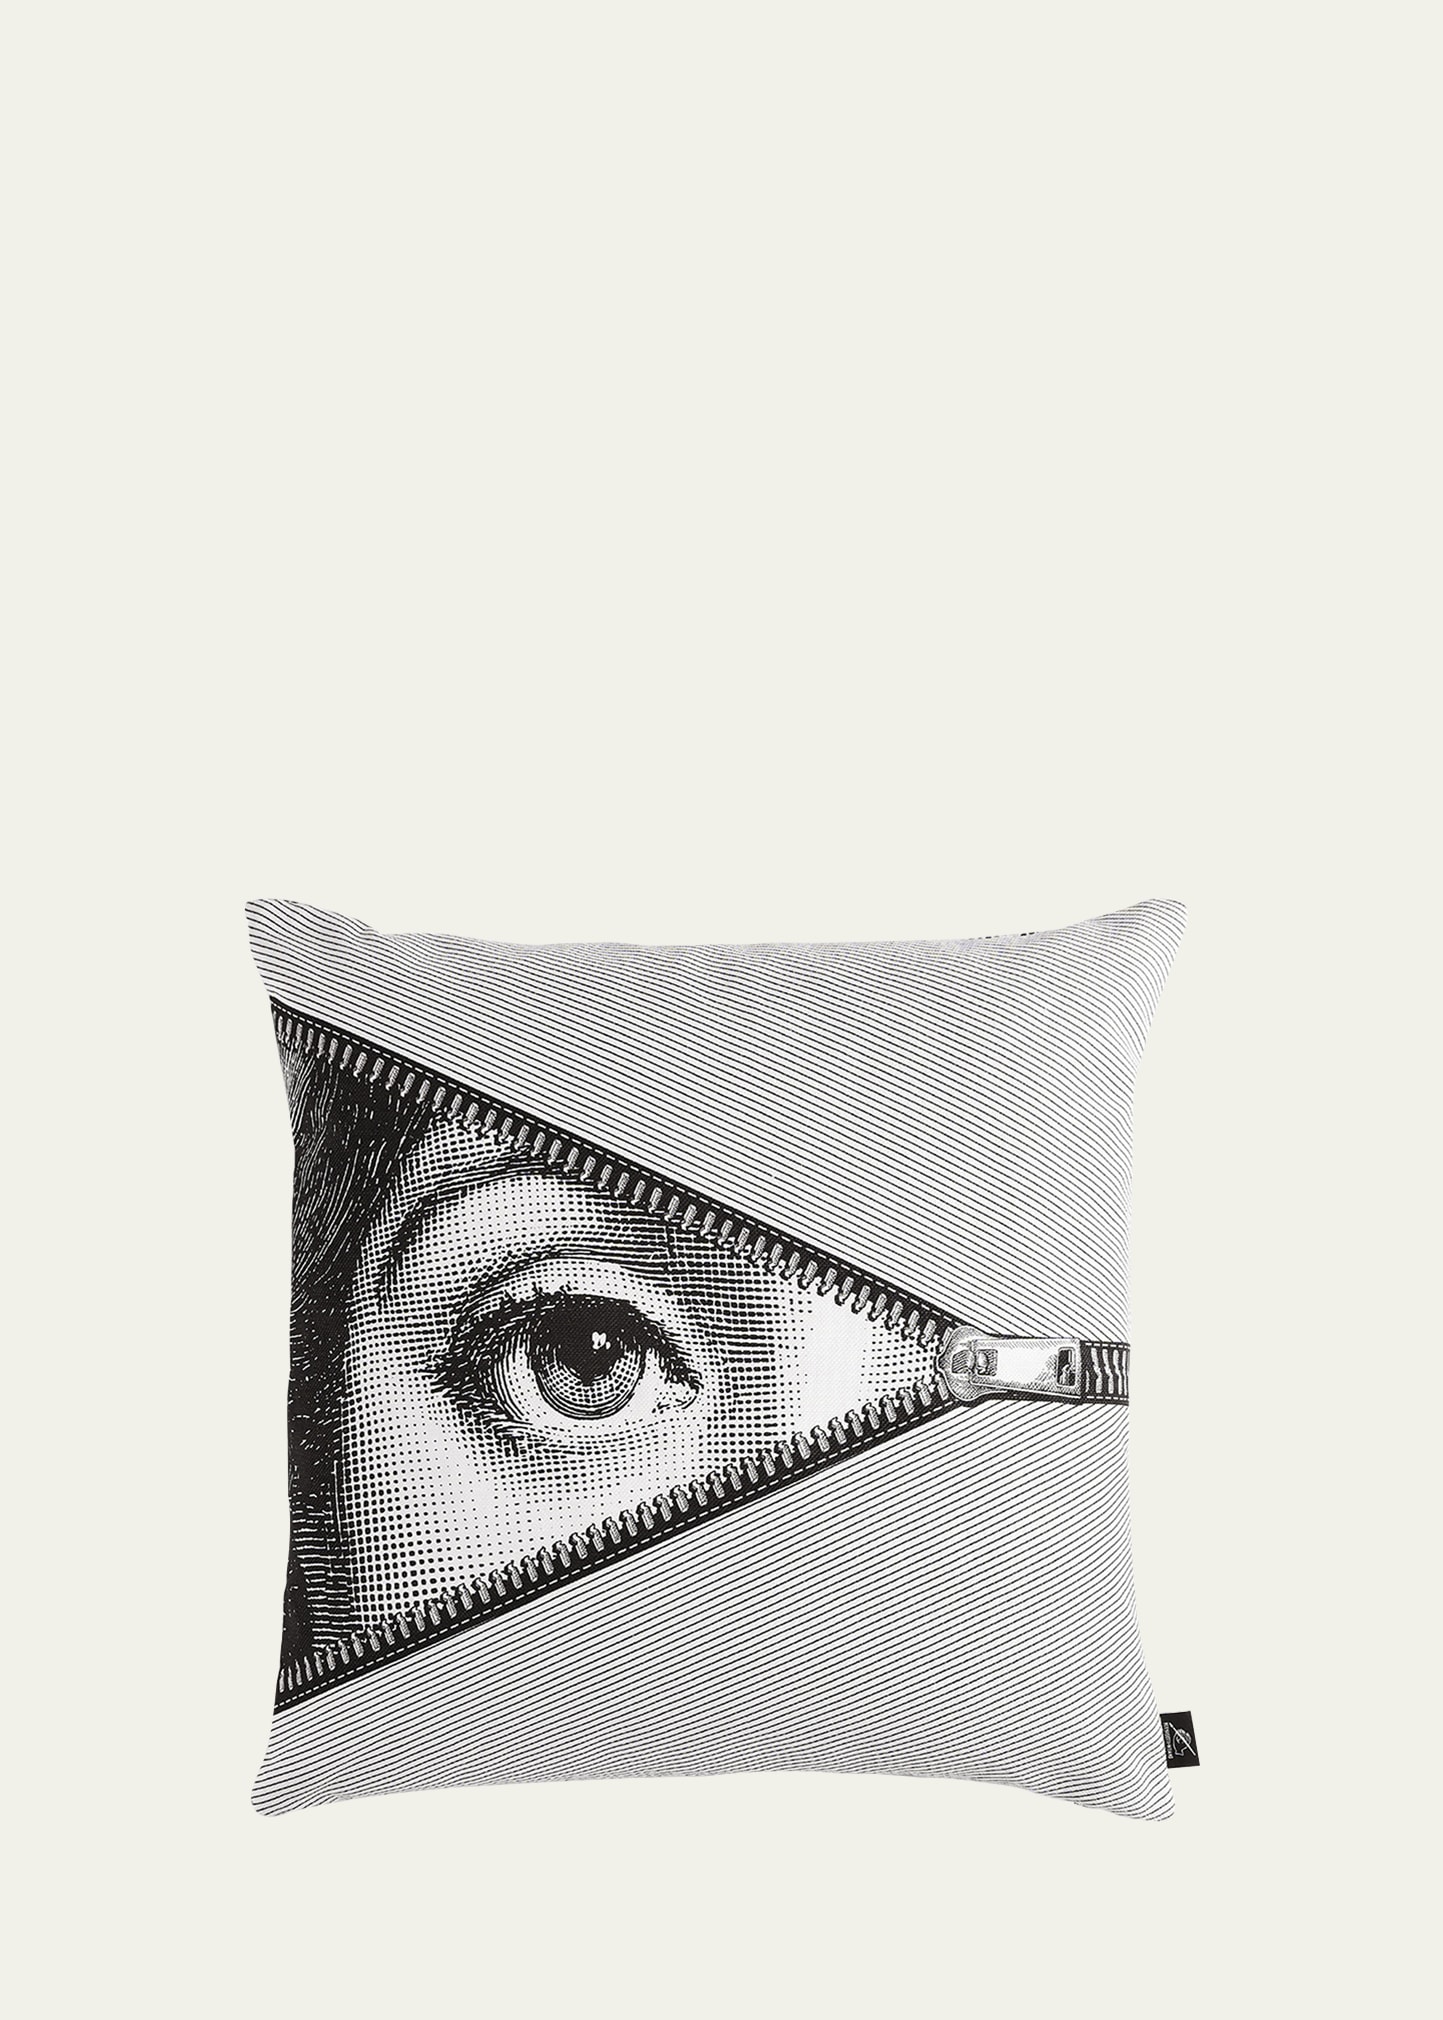 Fornasetti Tema E Variazioni N401 Pillow, 16"sq. In White/black